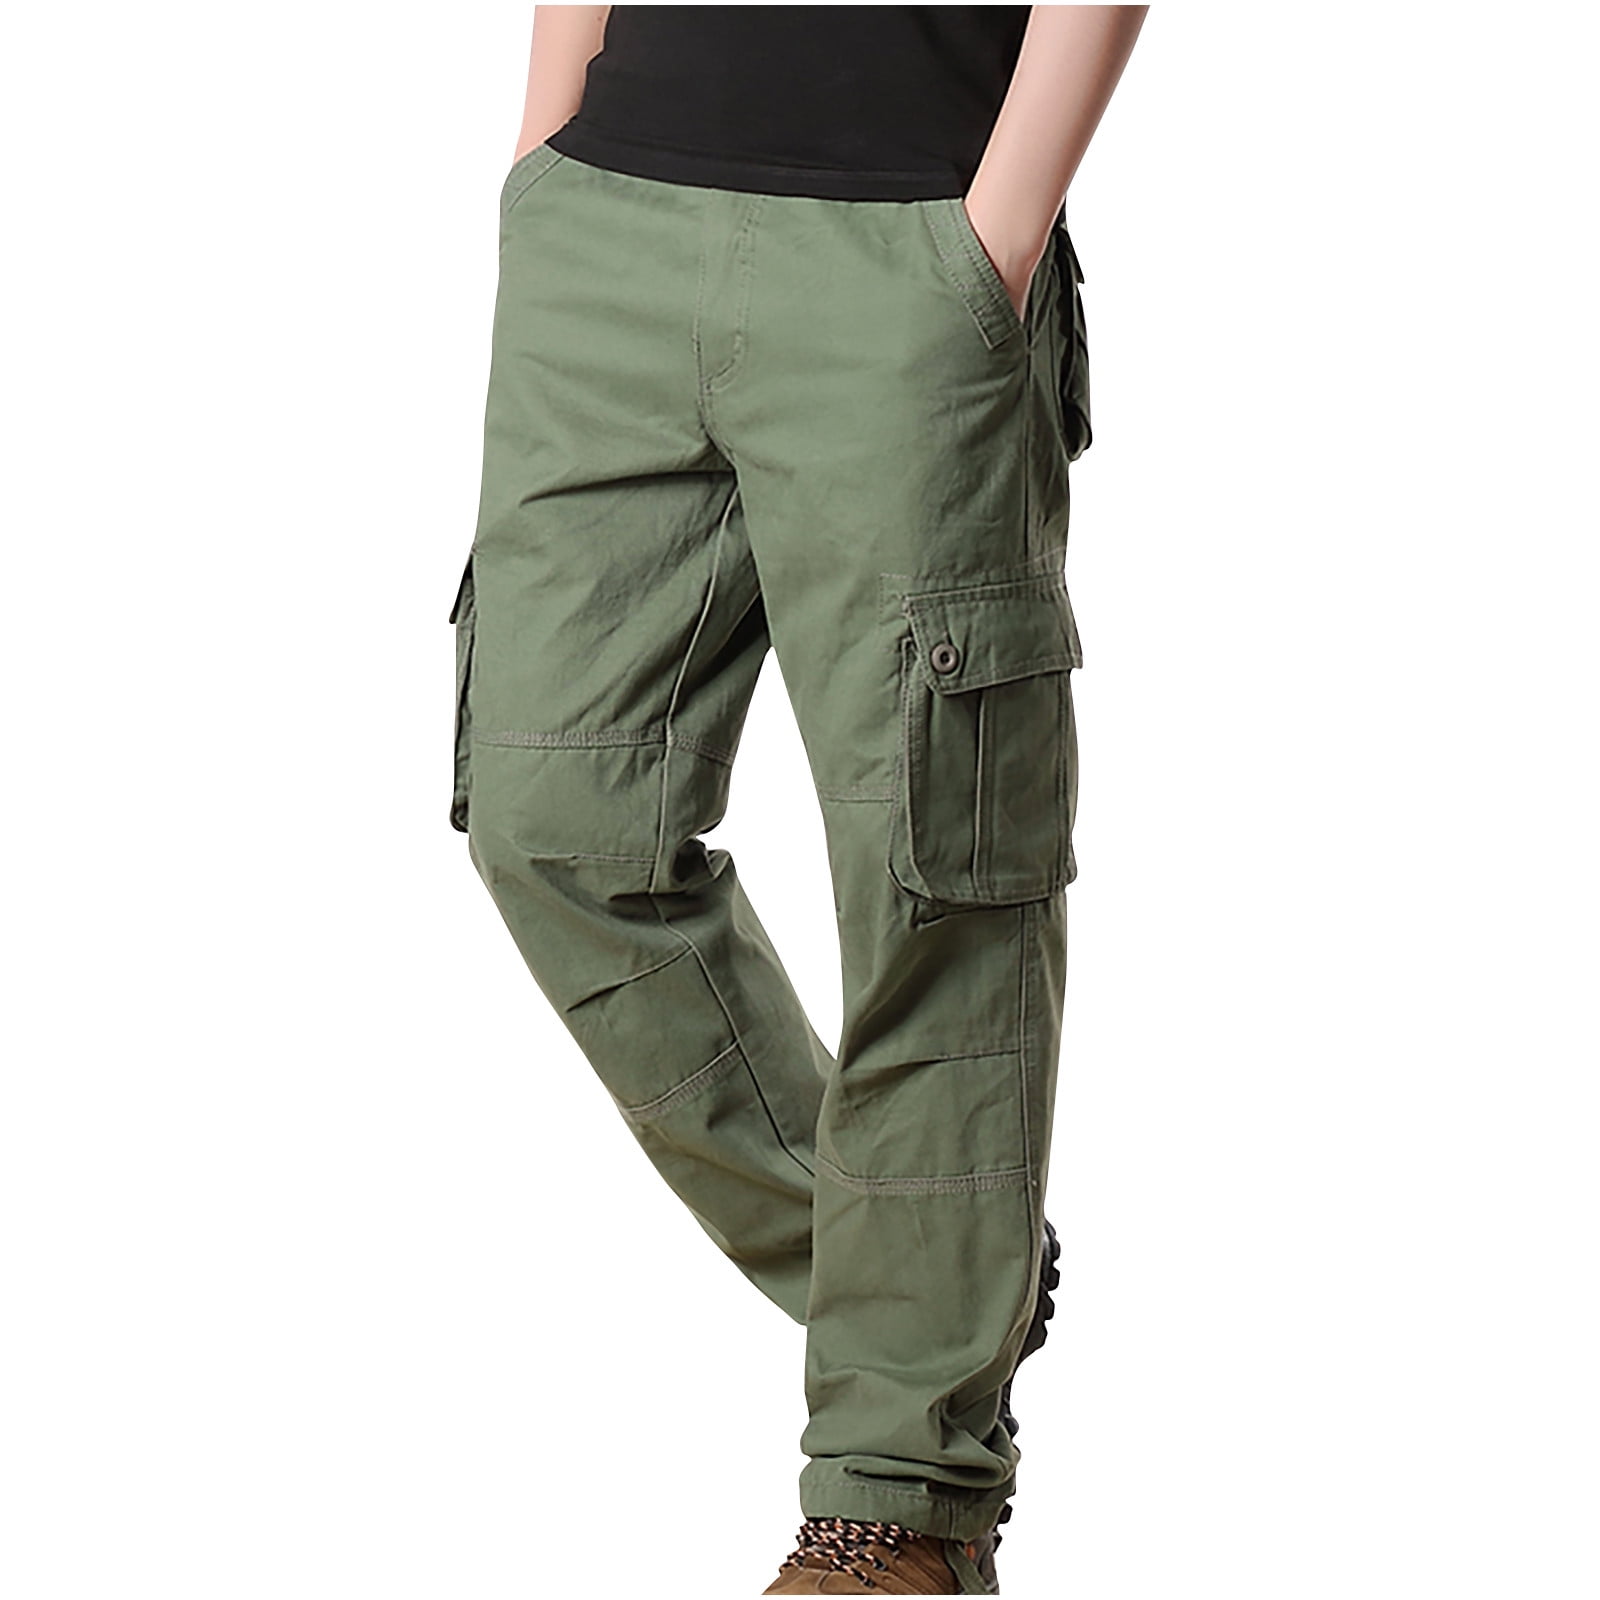 Herrnalise Men's Cargo Joggers Pants Fashion Casual Slim Multi Pocket ...